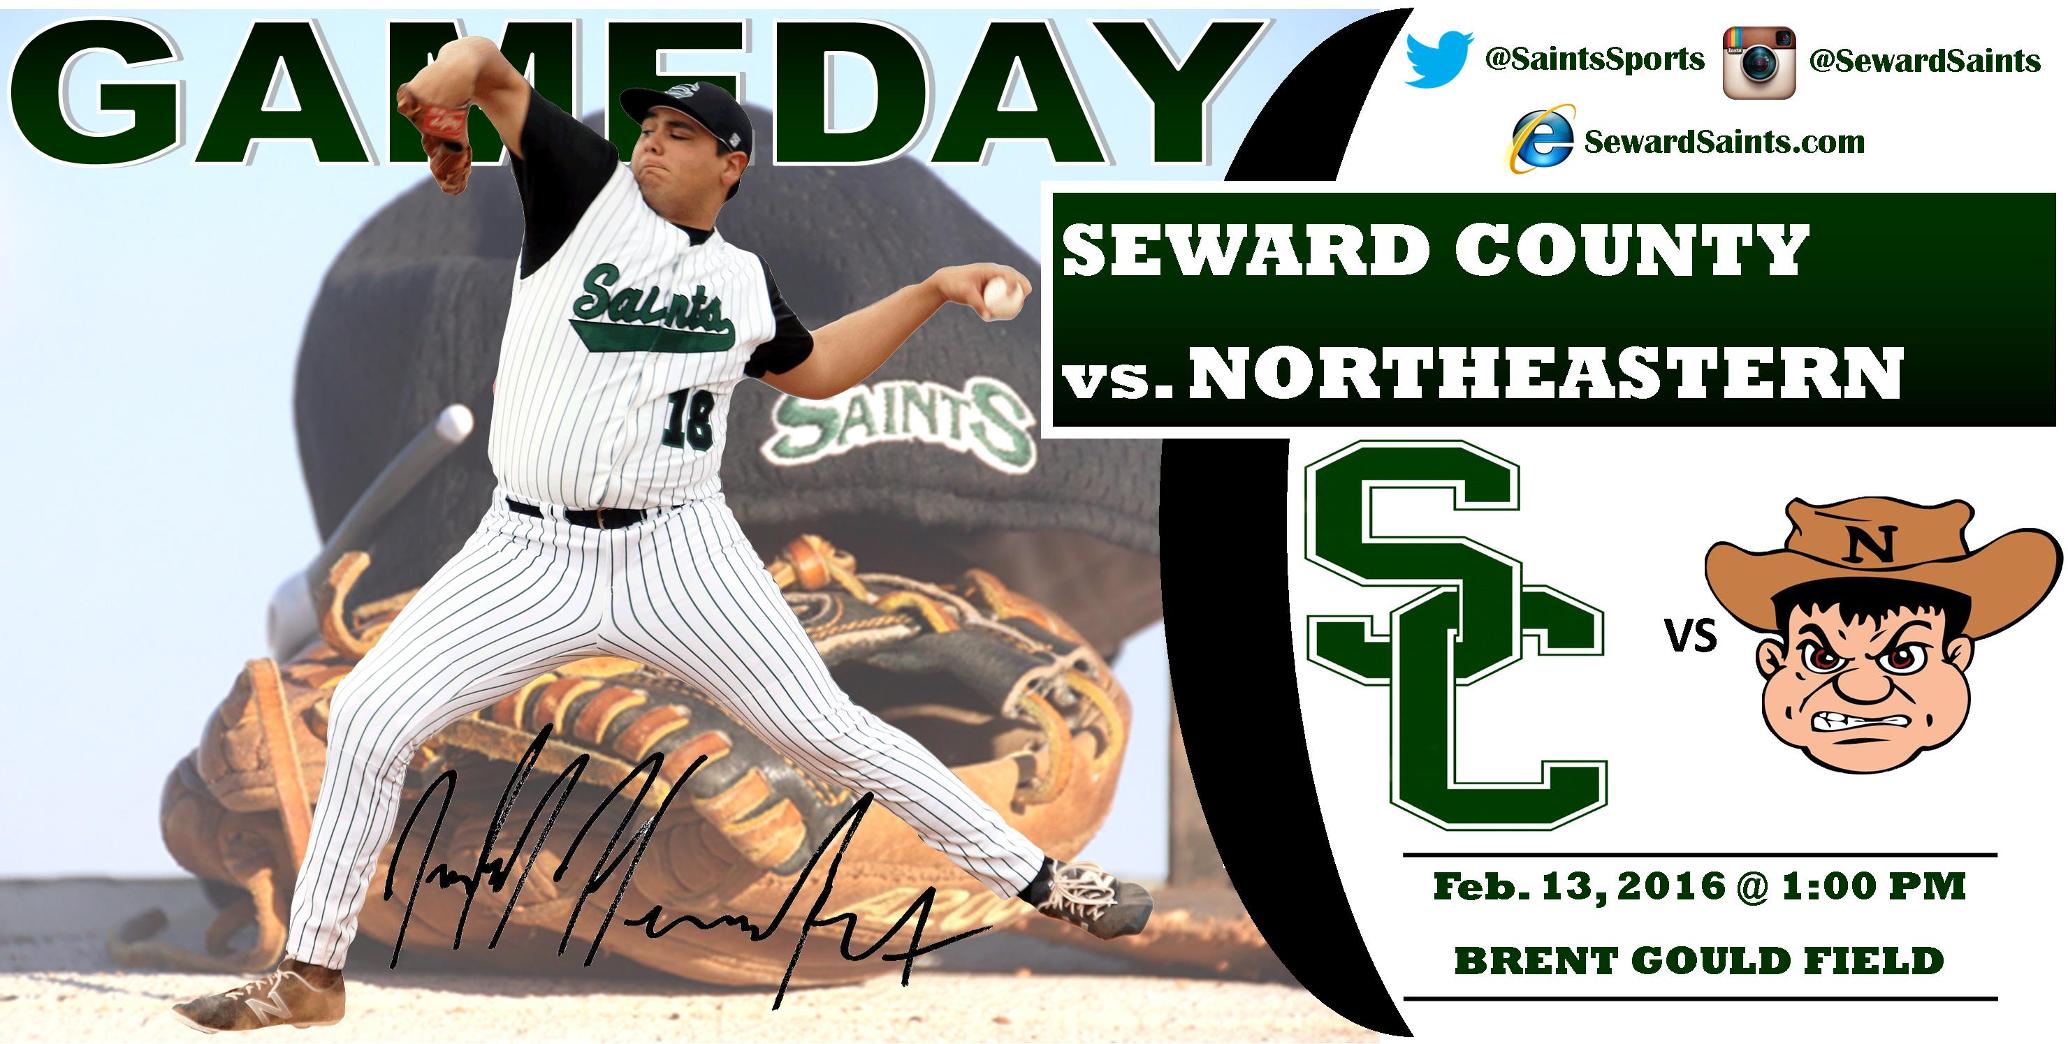 IT'S GAMEDAY AT BRENT GOULD FIELD: Seward County vs. Northeastern Baseball